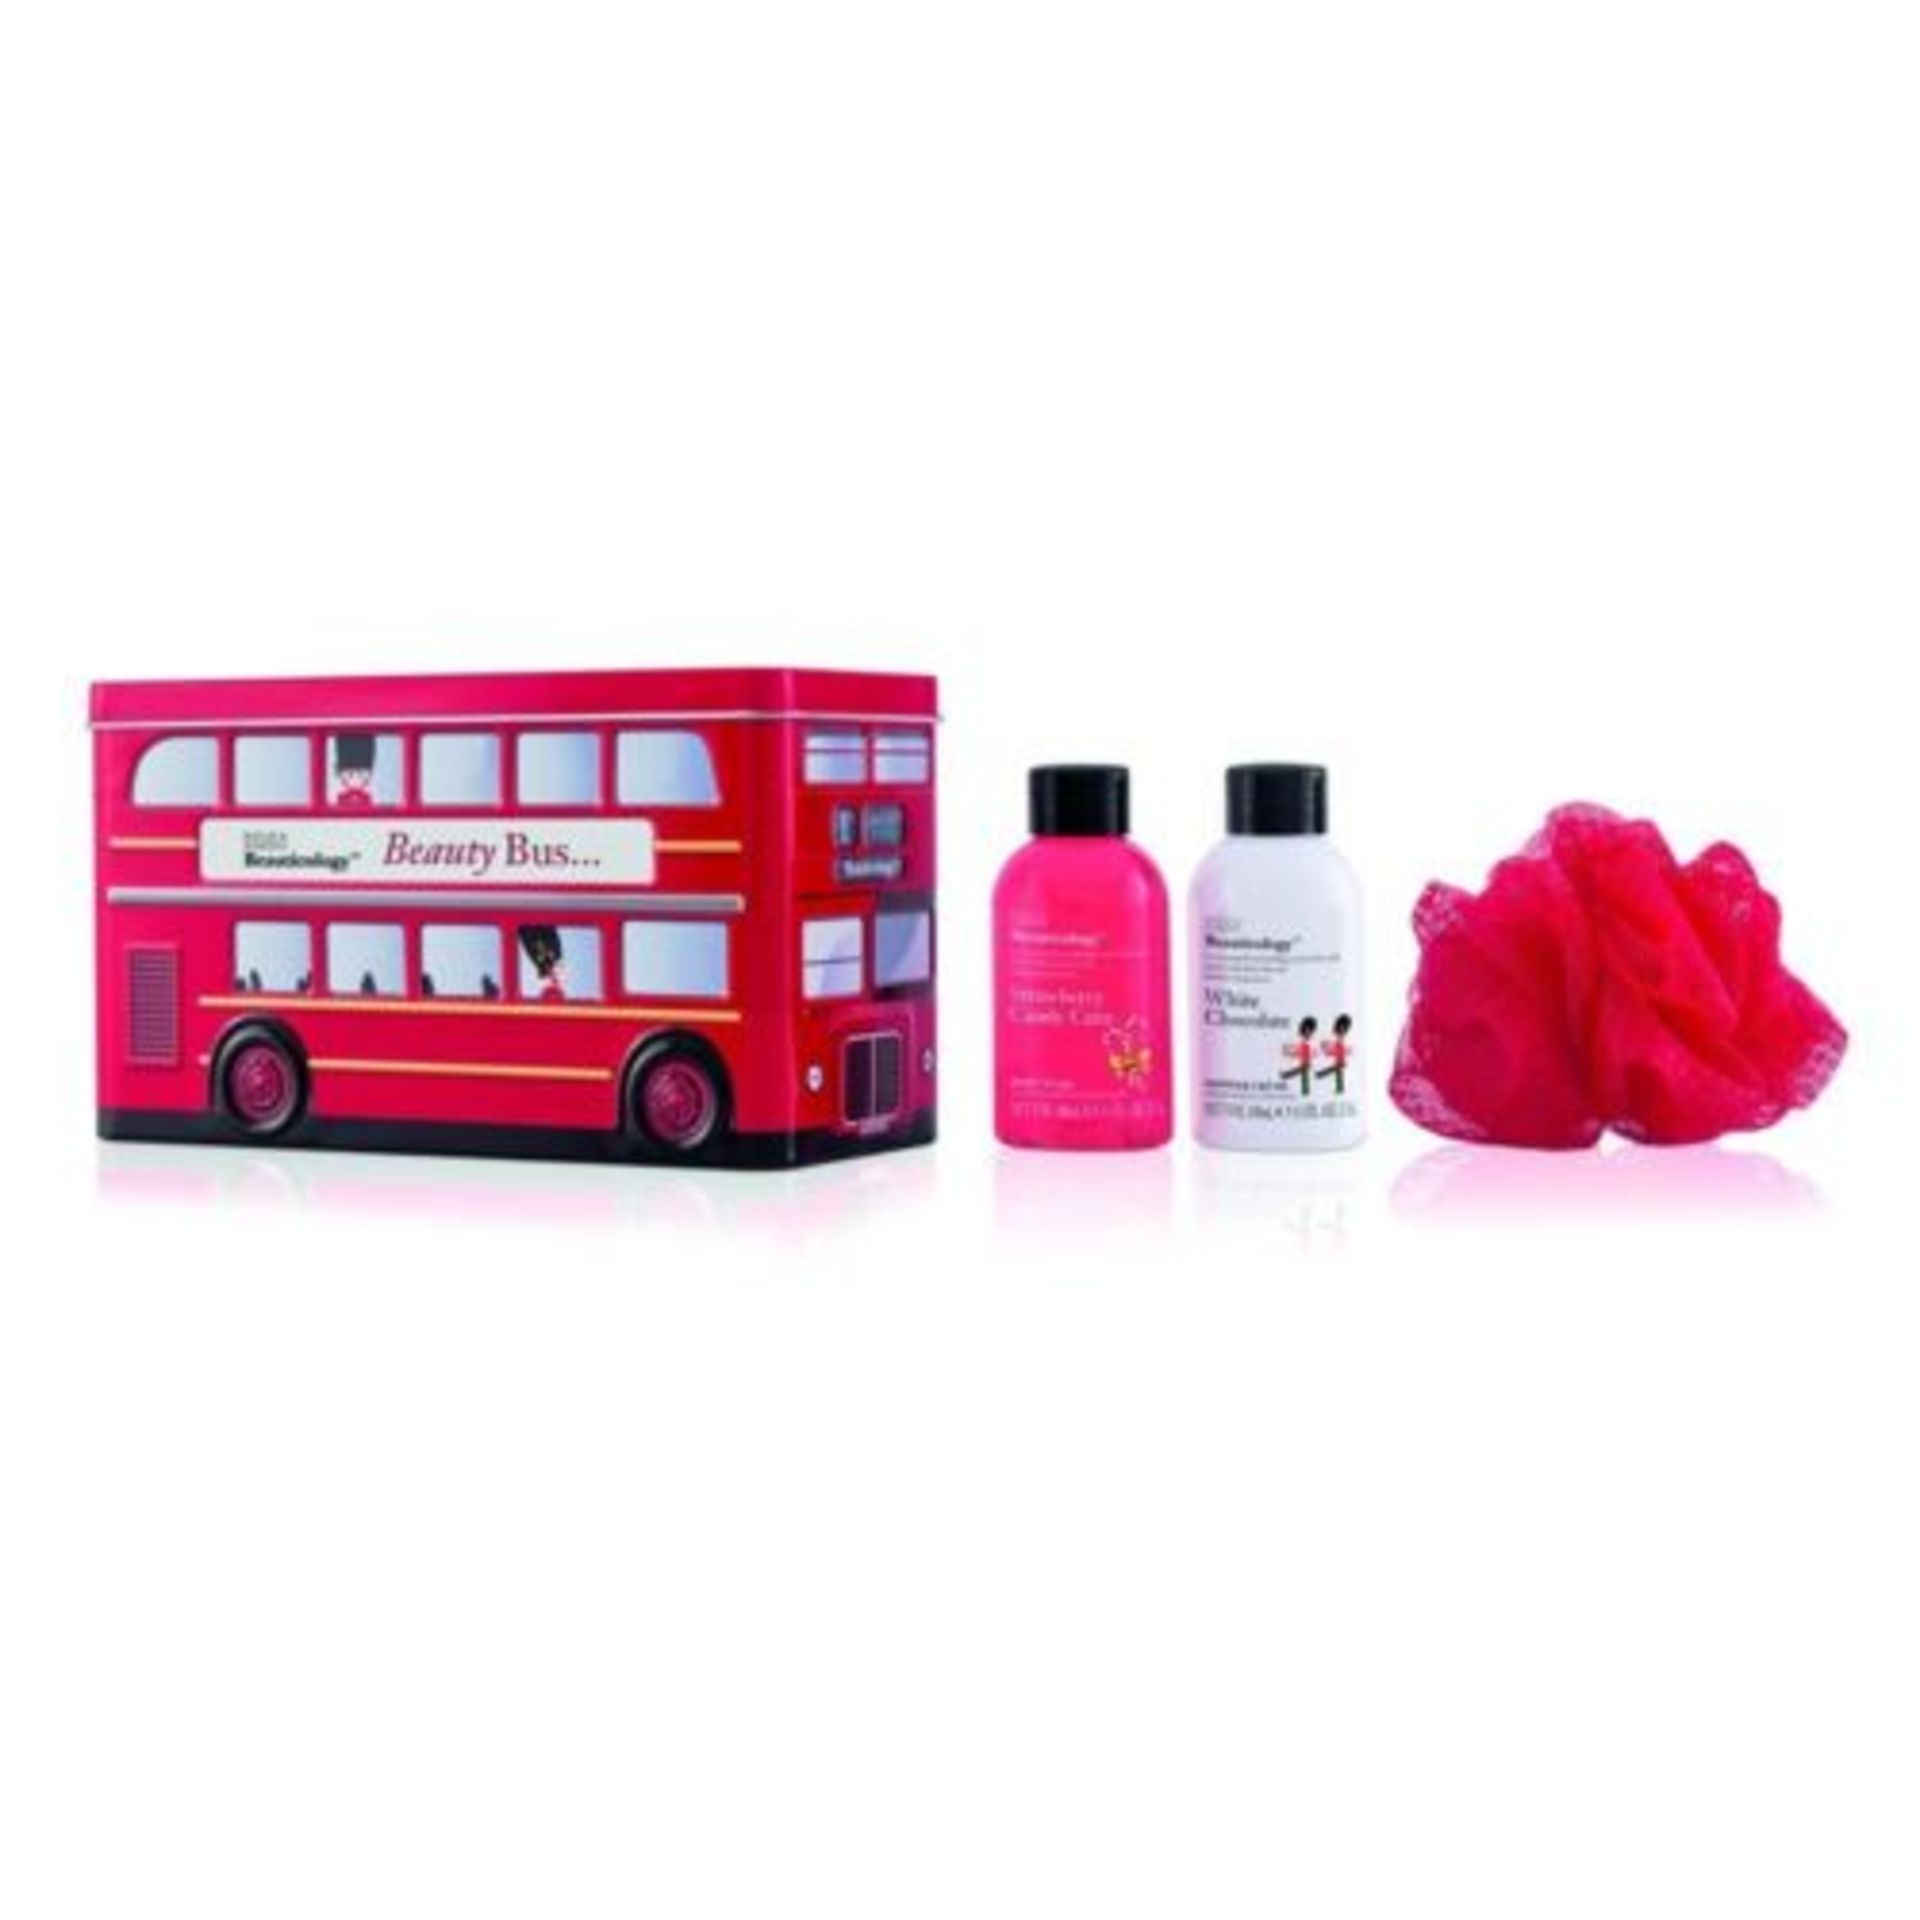 V *TRADE QTY* Brand New Baylis & Harding Beauticology Beauty Bus Tin Containing 1 x Strawberry Candy